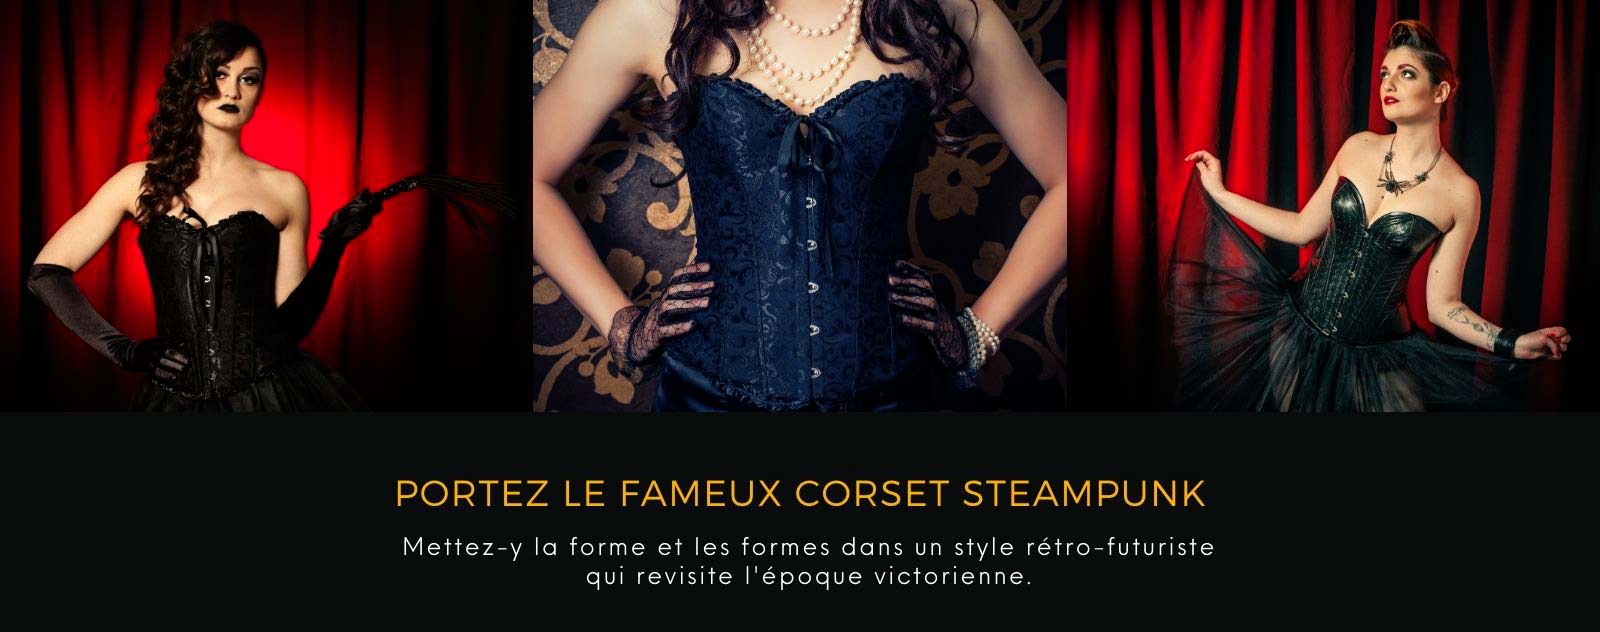 collection des corsets steampunk